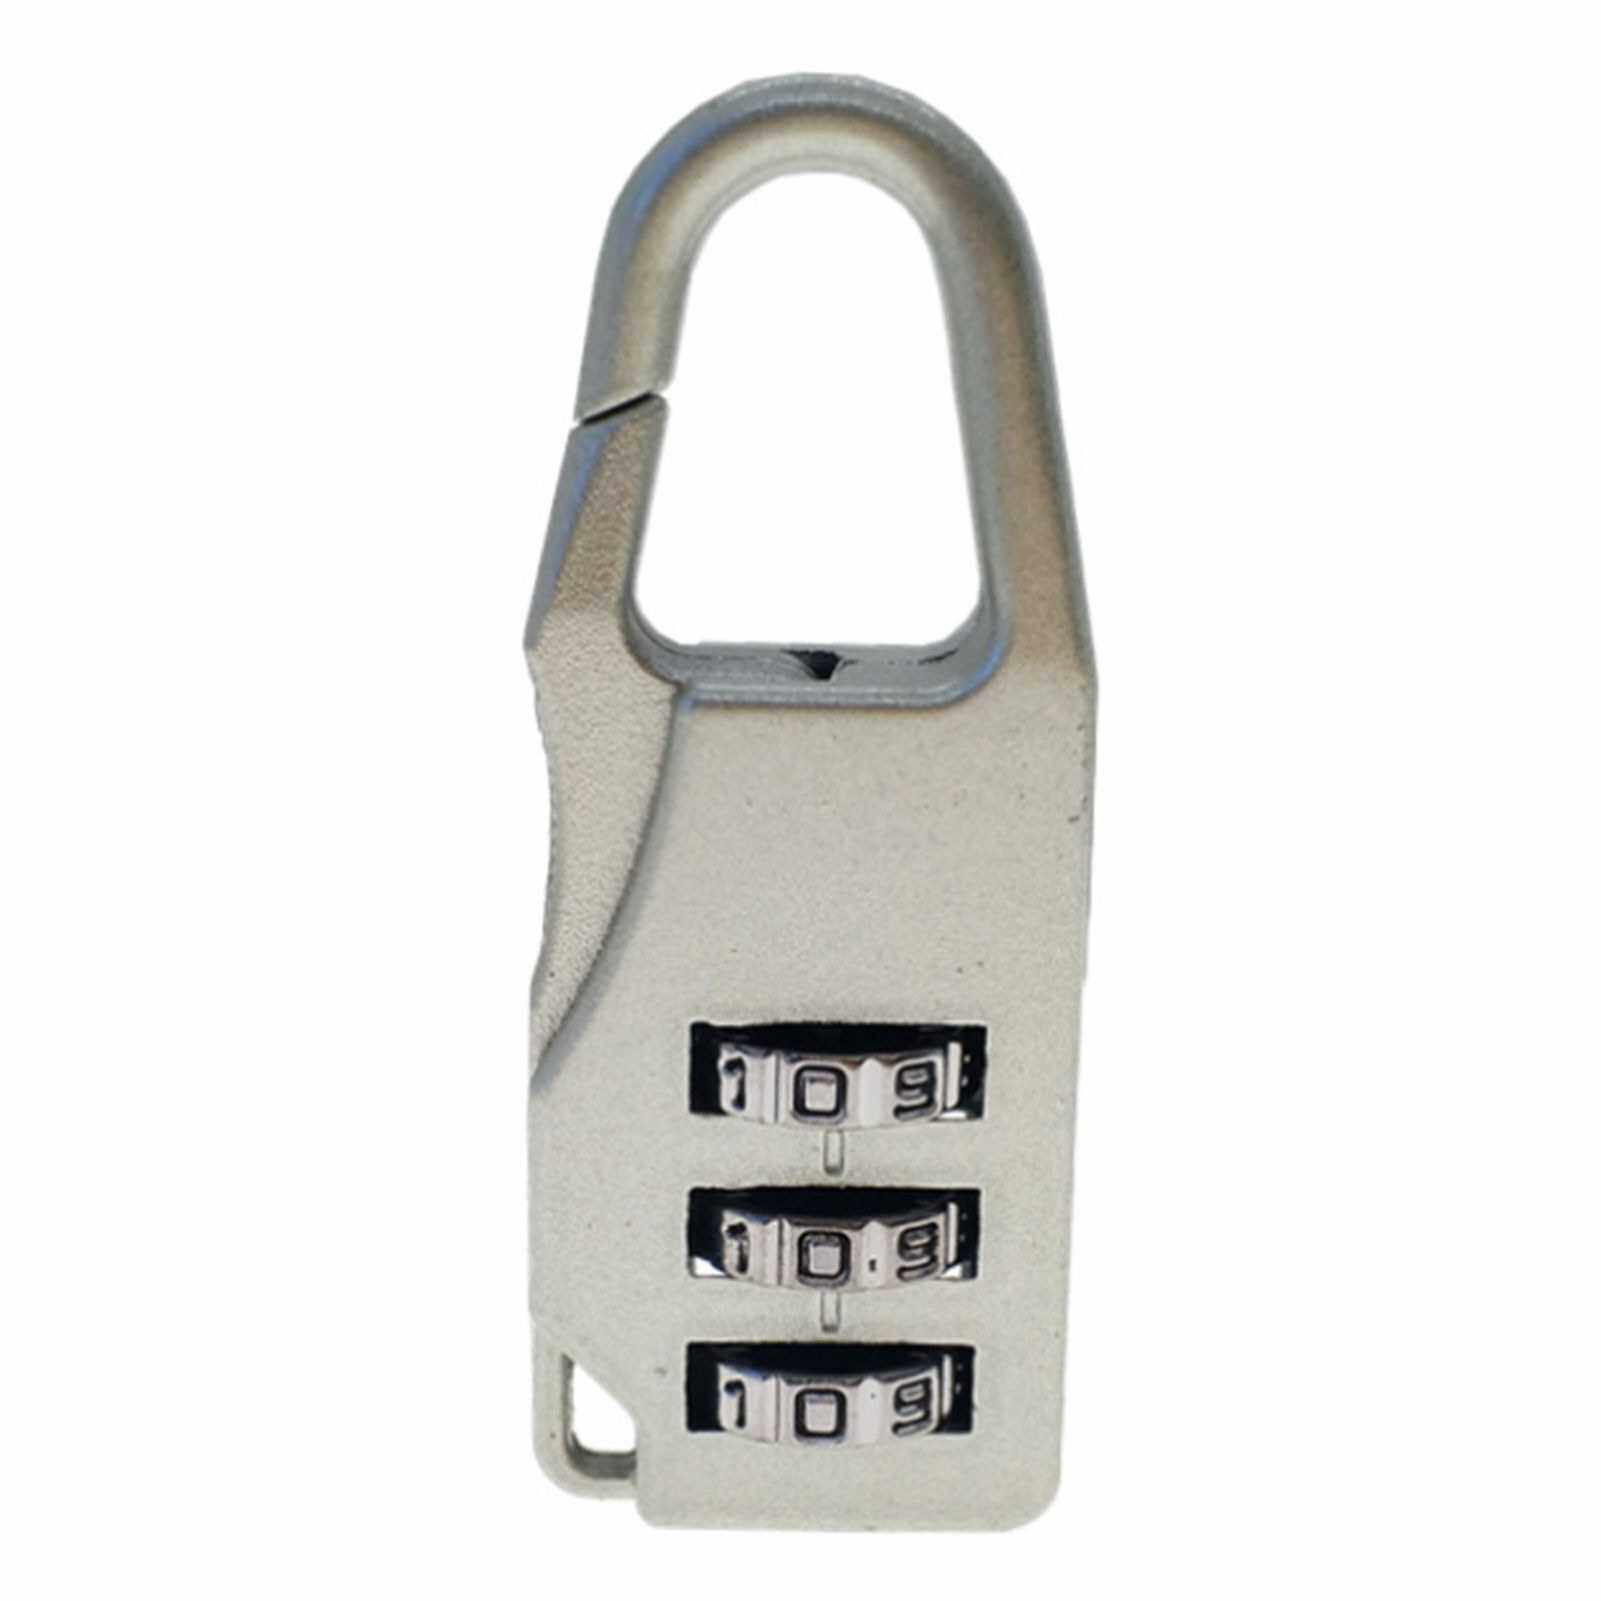 BEST SELLER 3 Dial Digit Number Code Password Combination Padlock Travel Security Safe Lock (Silver)